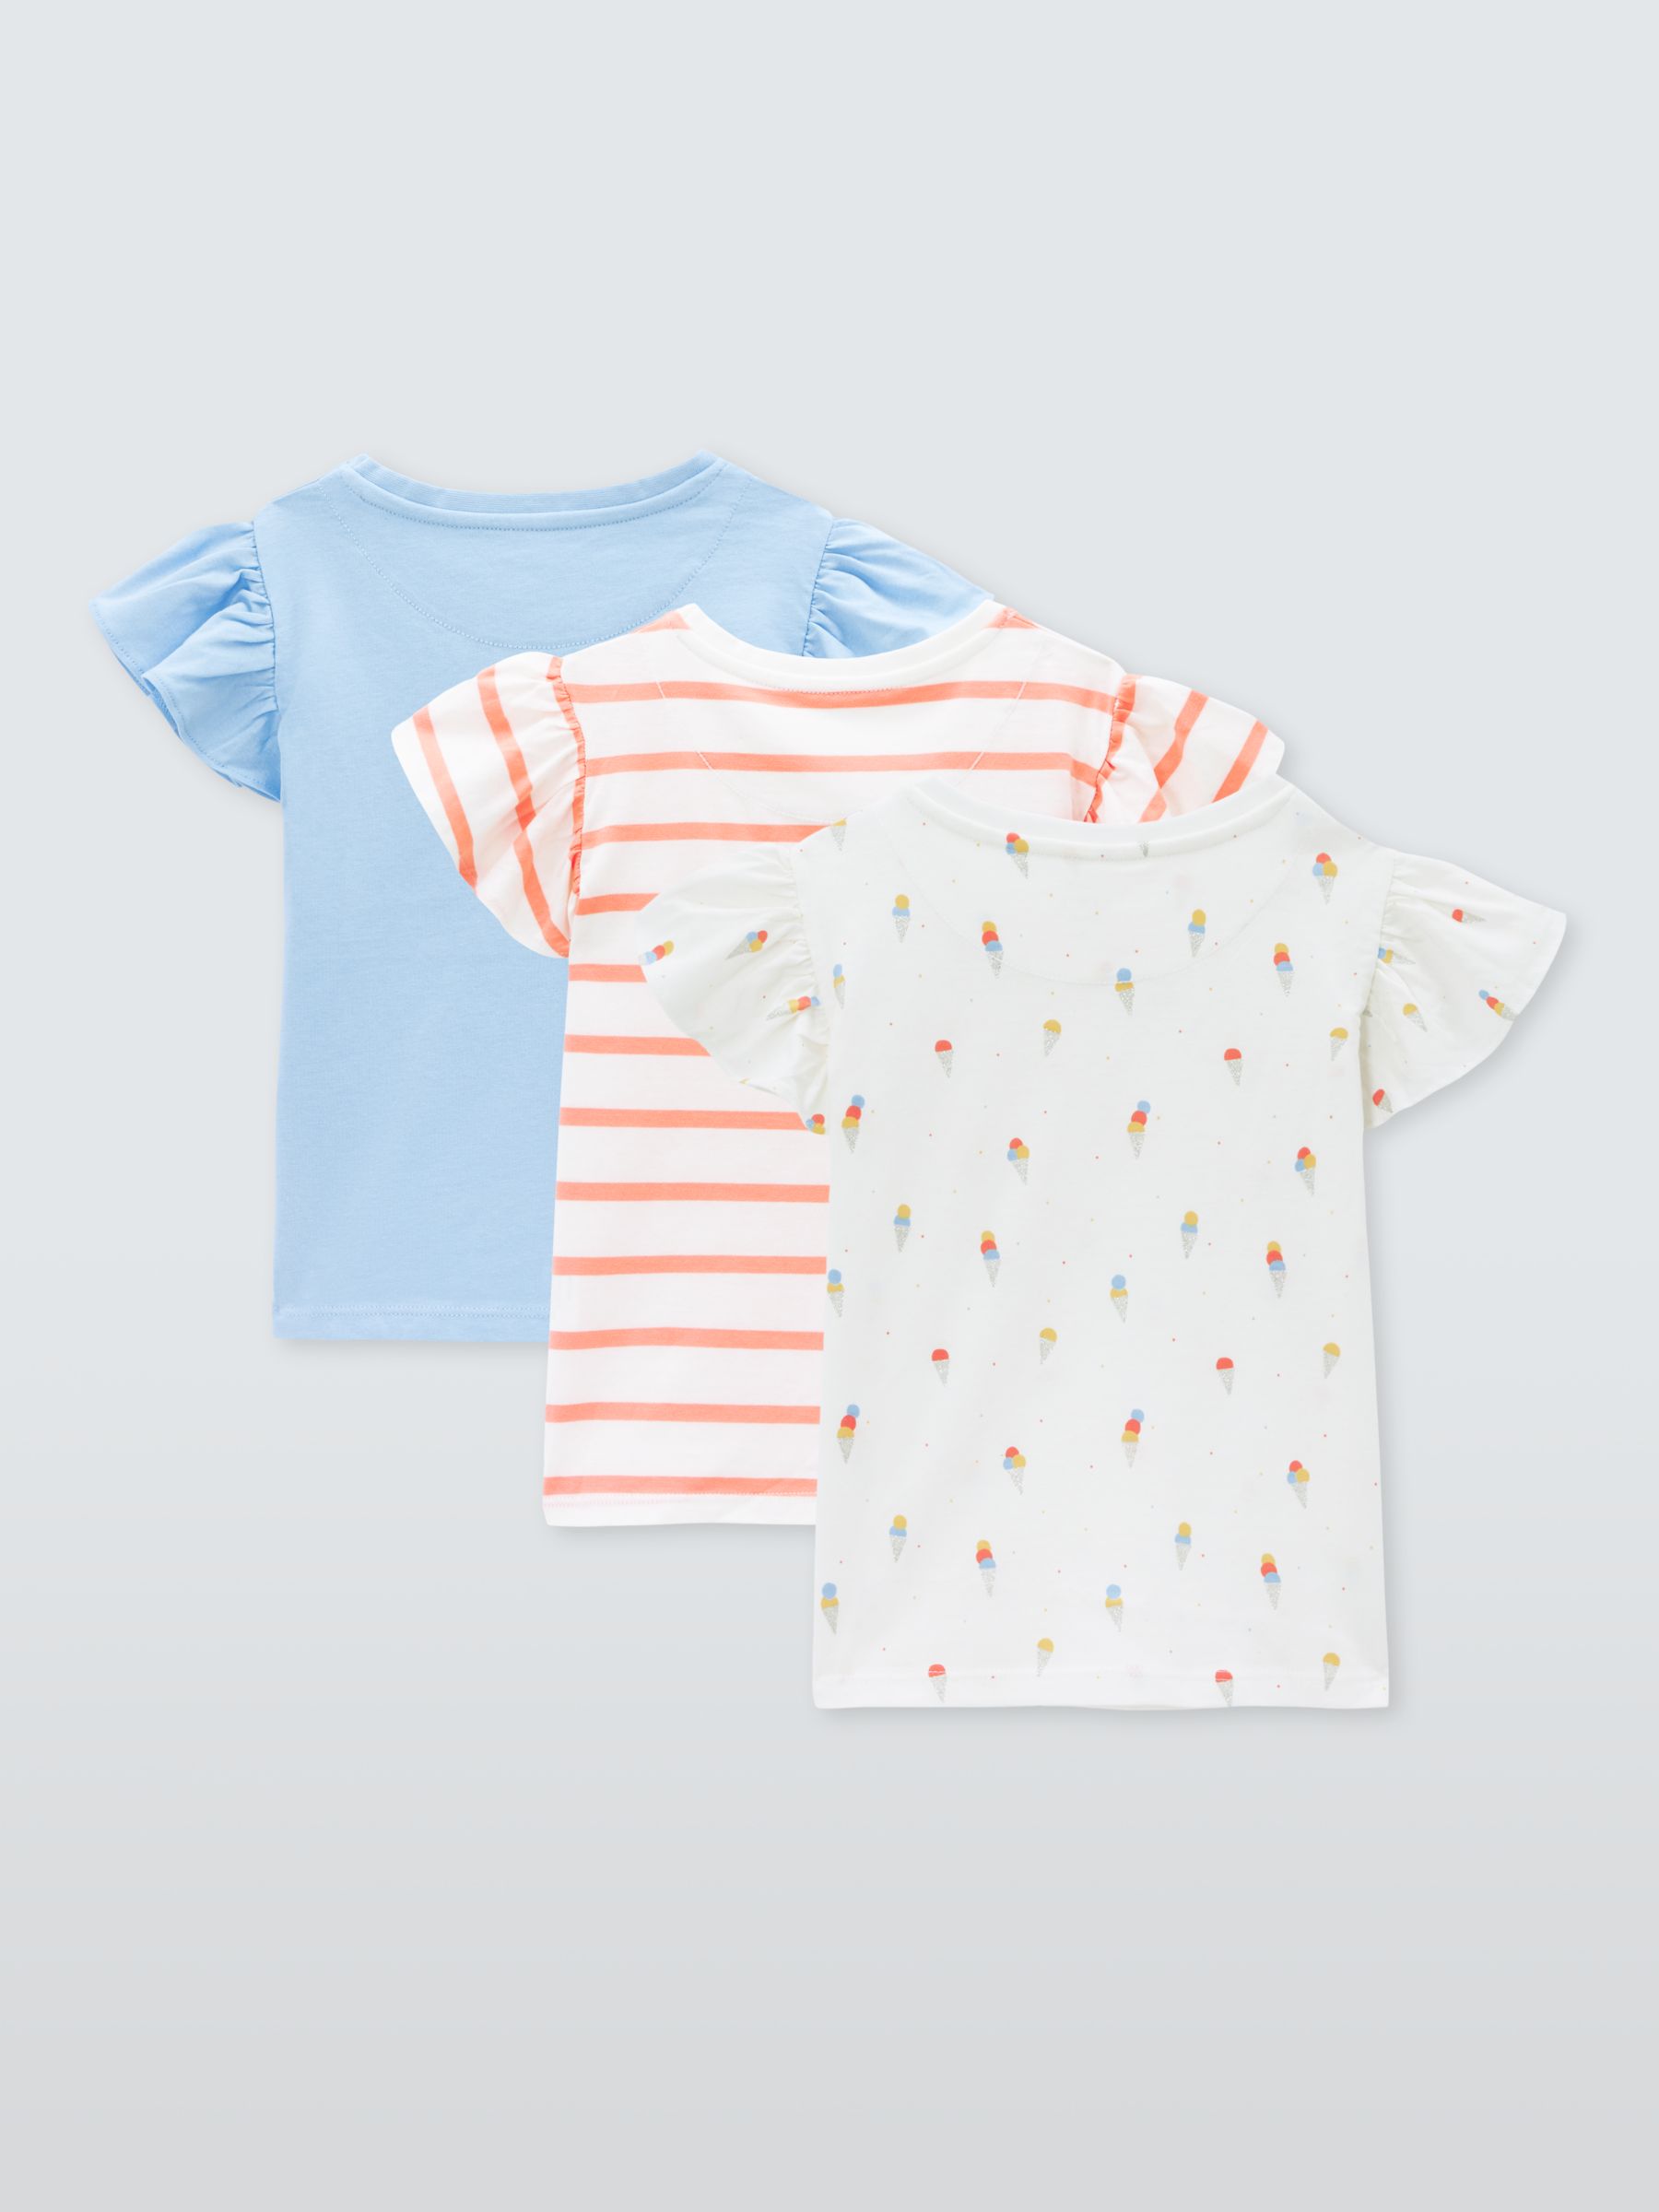 John Lewis Kids' Plain/Stripe/Ice Cream Frill Sleeve T-Shirts, Pack of 3, Multi, 7 years